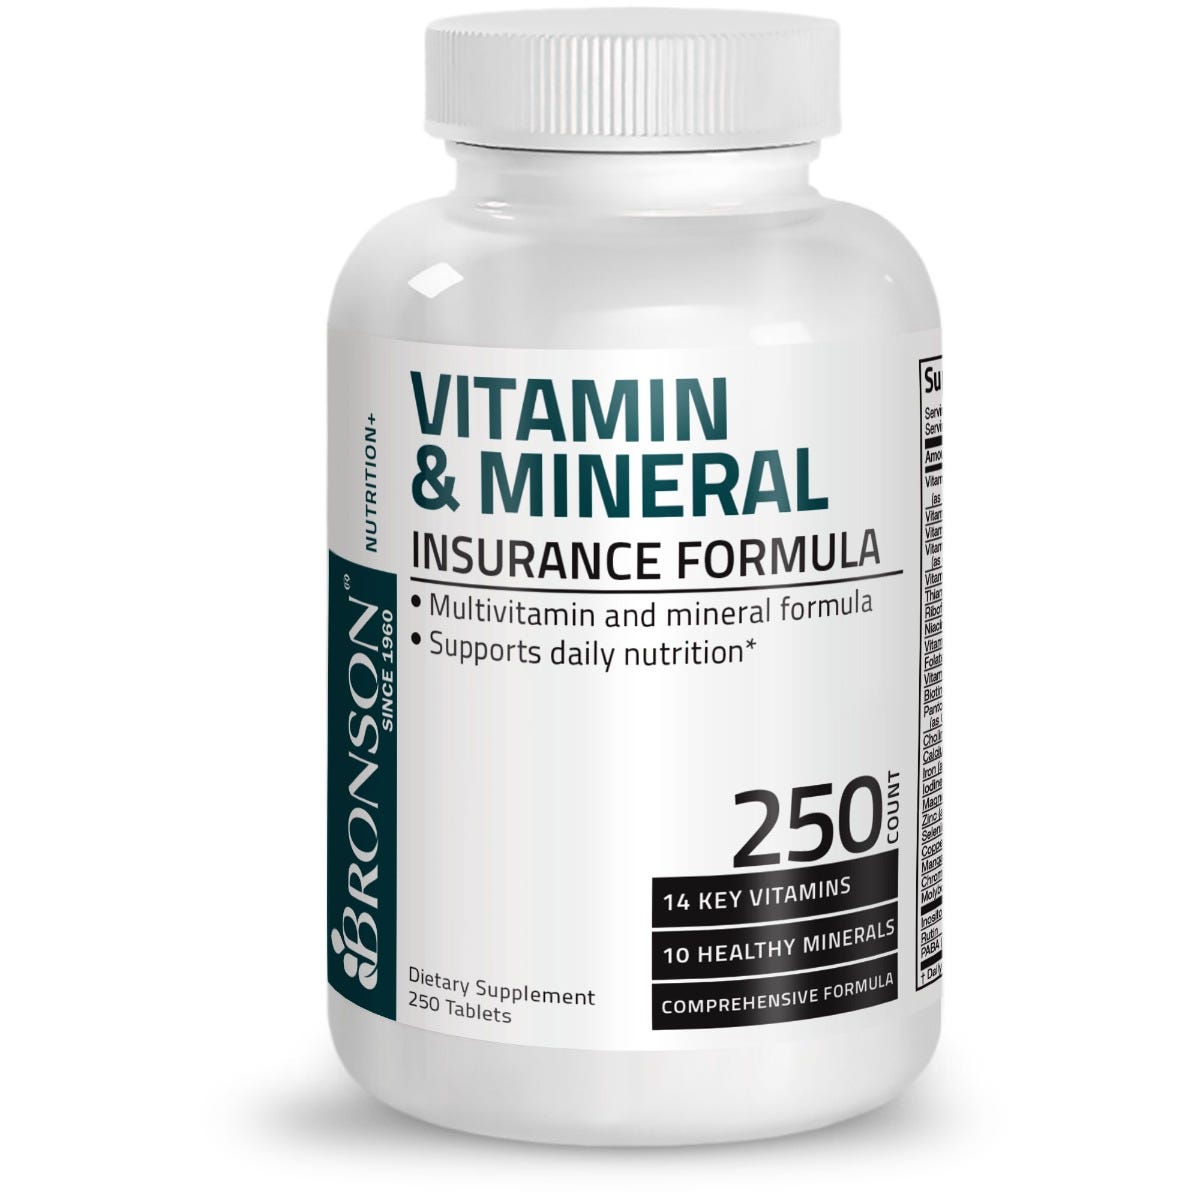 Vitamin & Mineral Insurance Formula - 250 Tablets